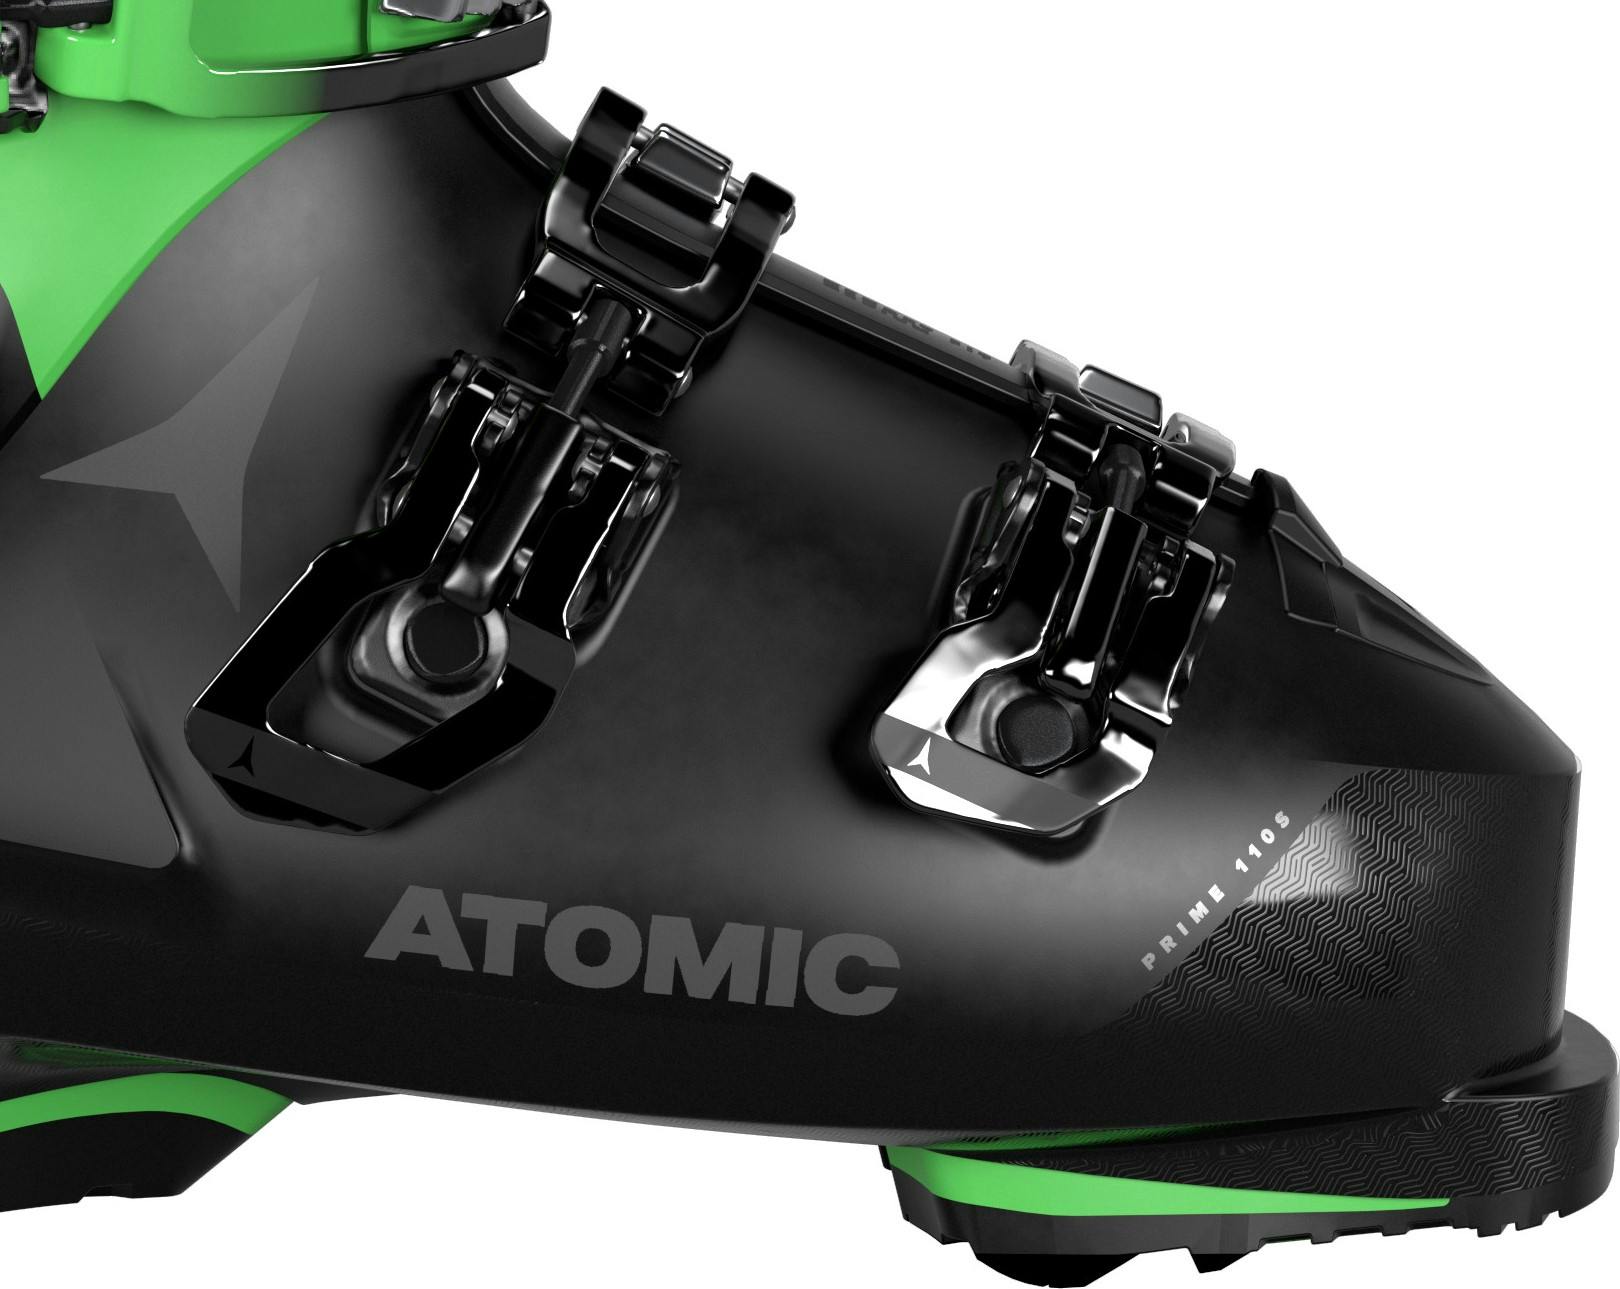 Atomic Hawx Prime 110 S GW Ski Boots · 2023 · 26/26.5